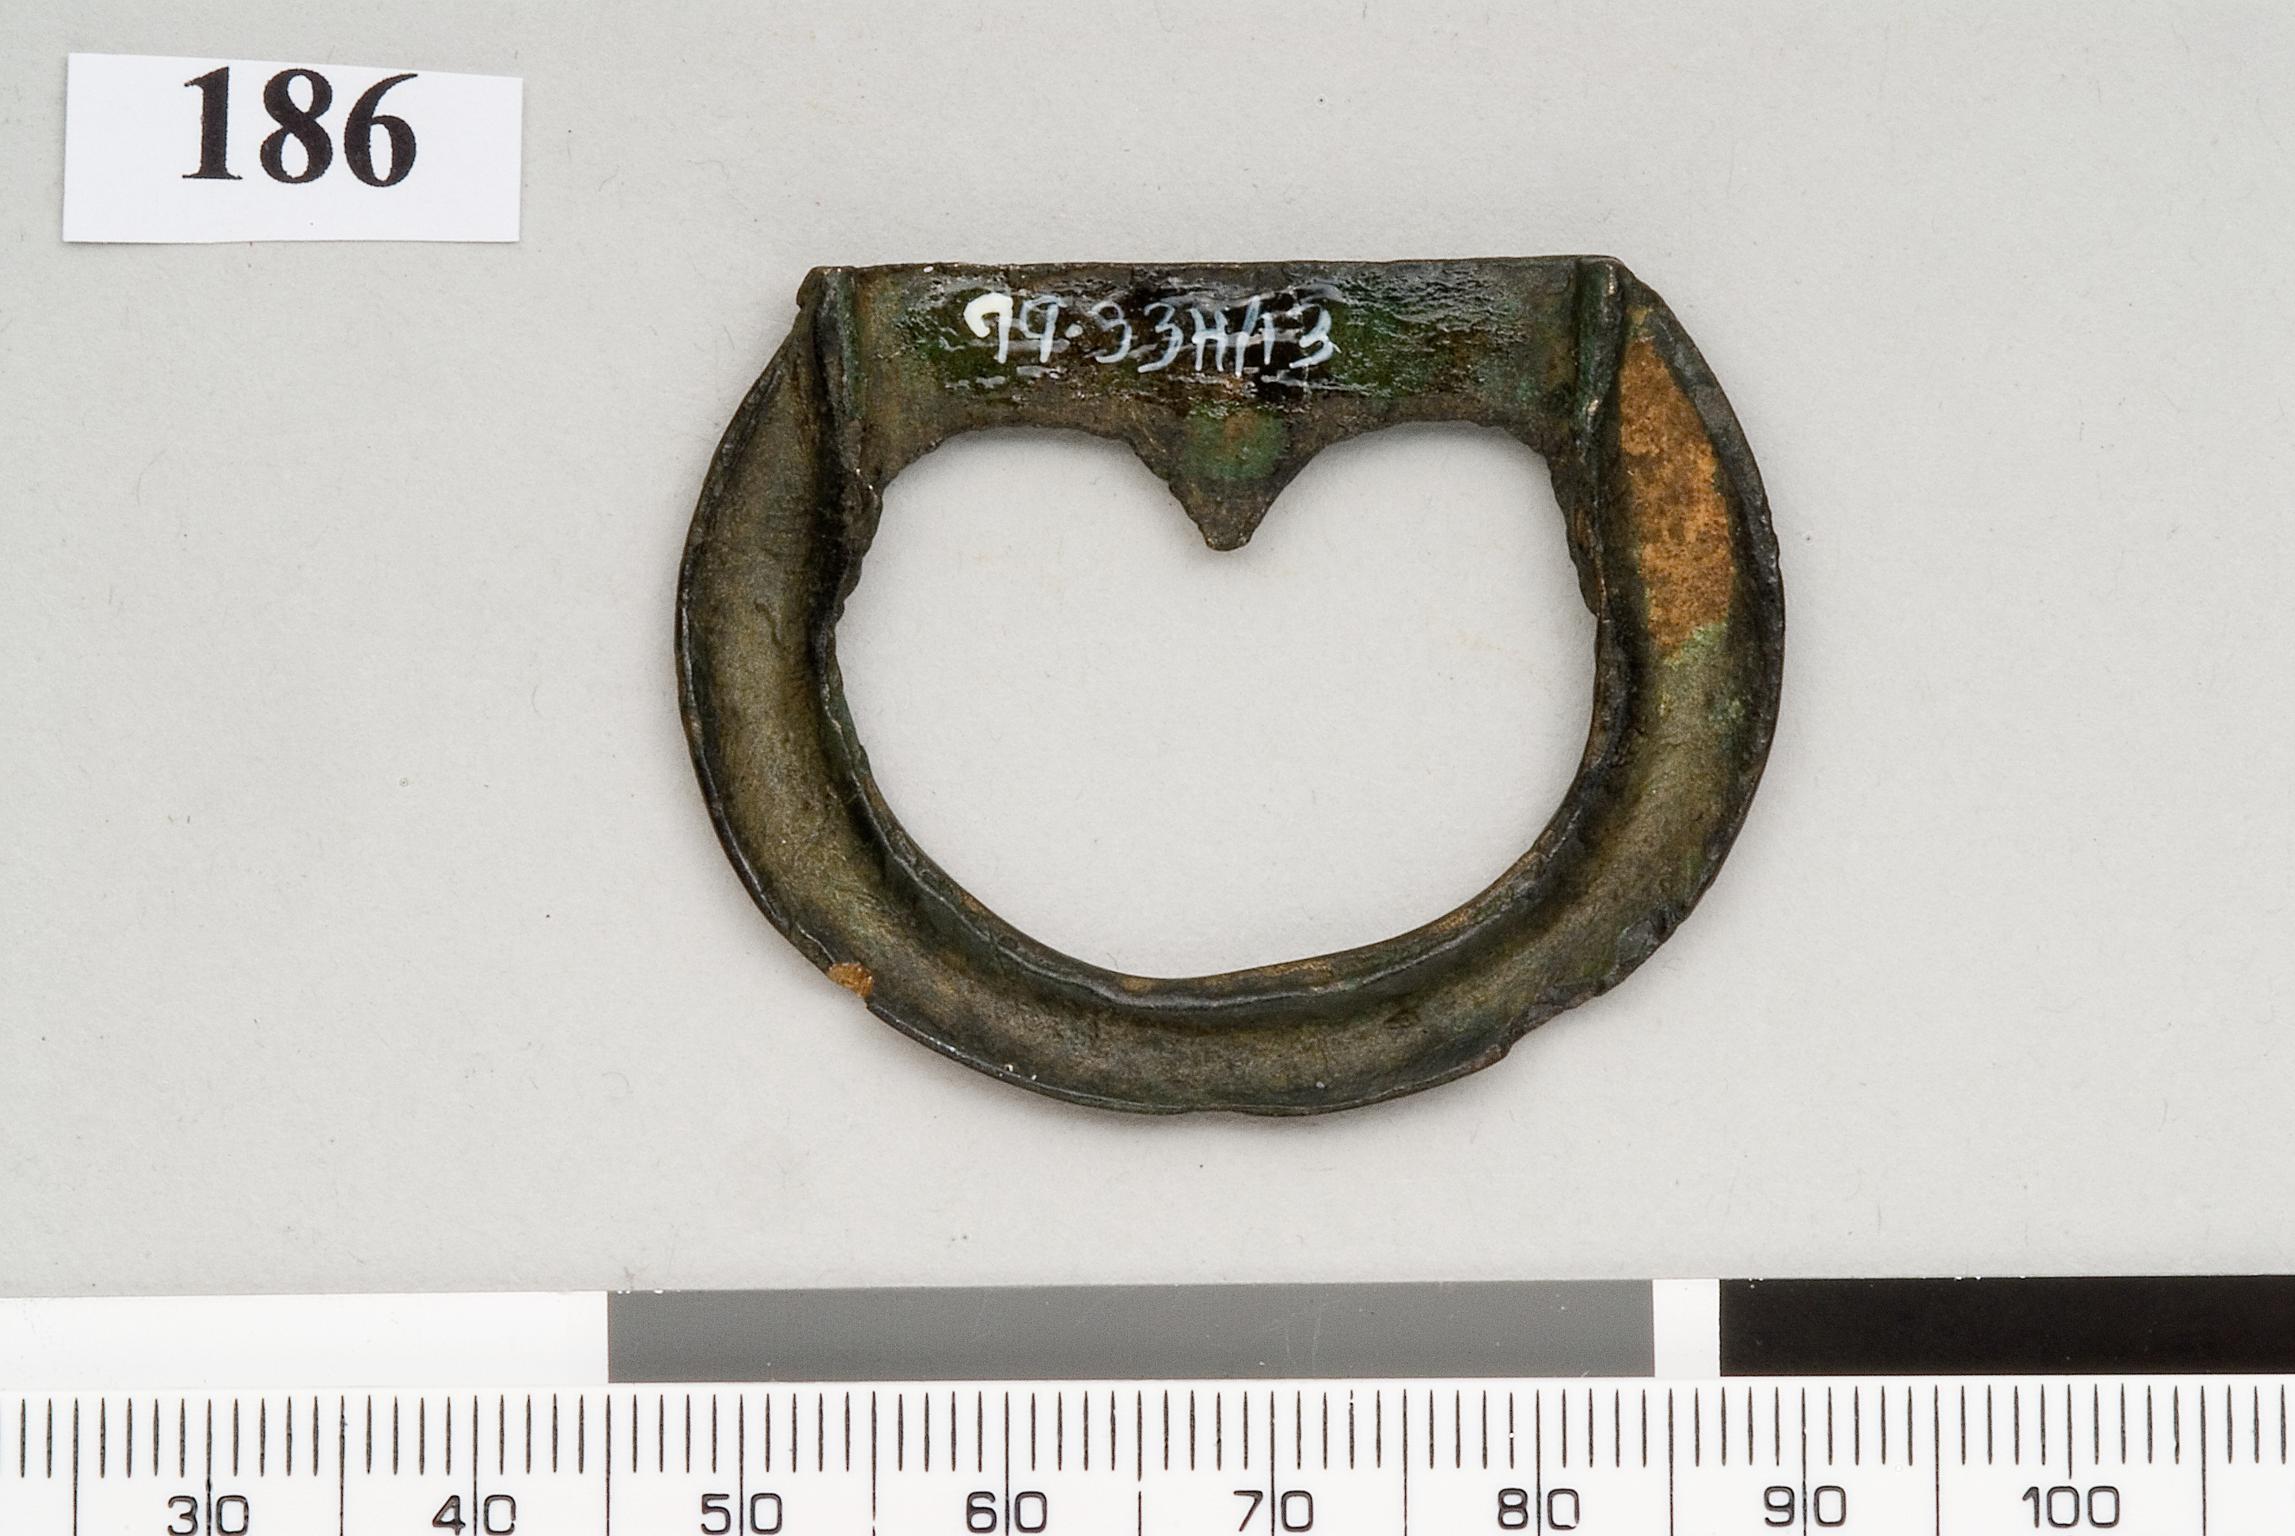 Late Bronze Age bronze buckle